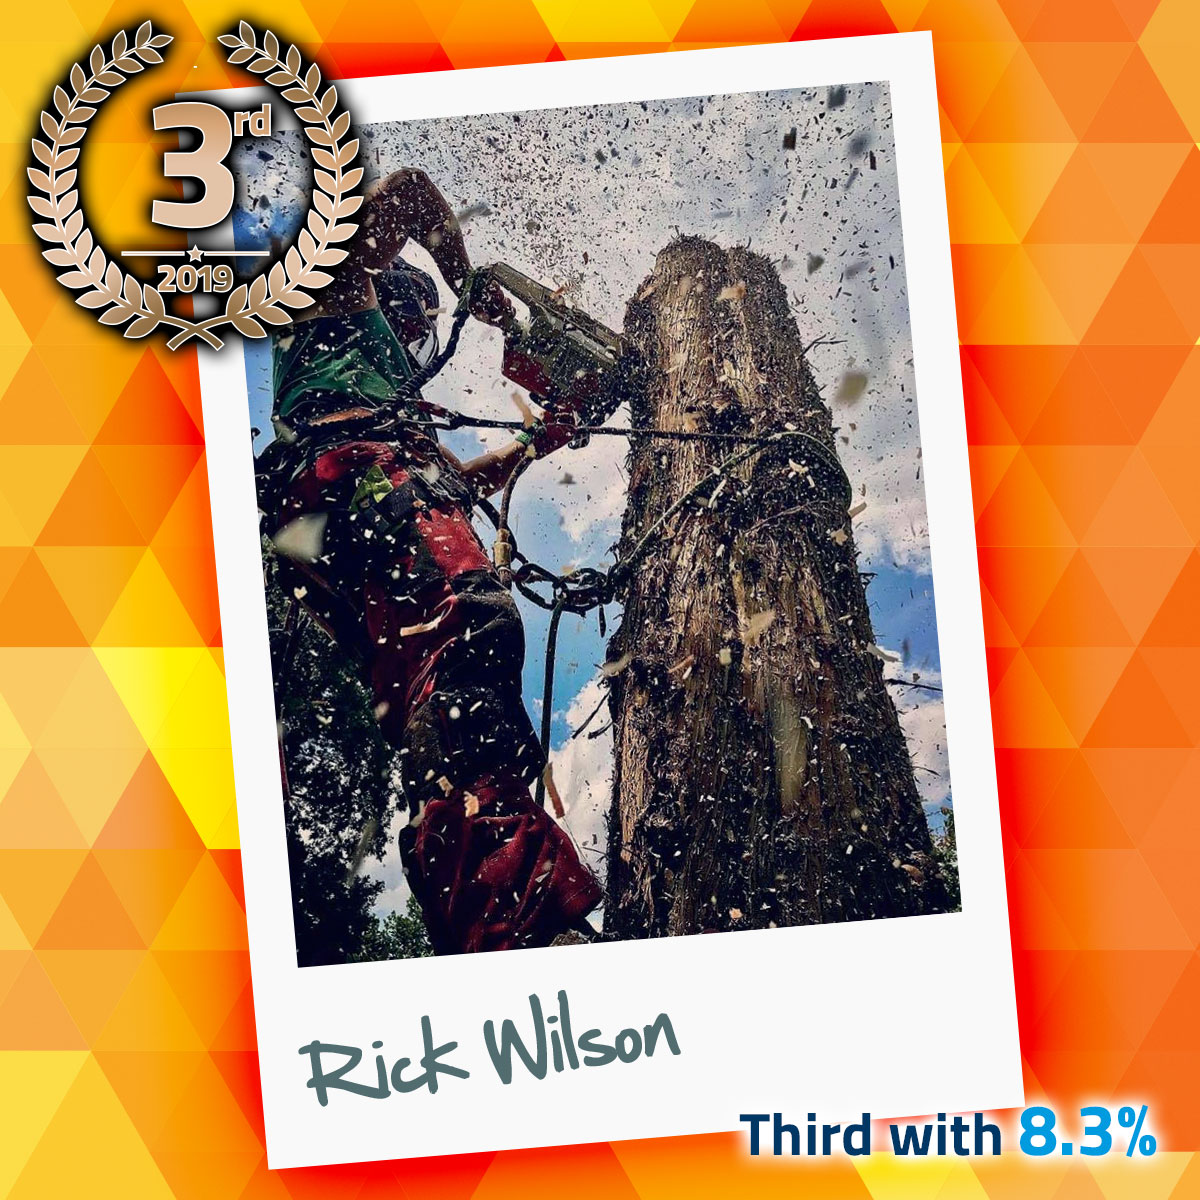 Rick Wilson